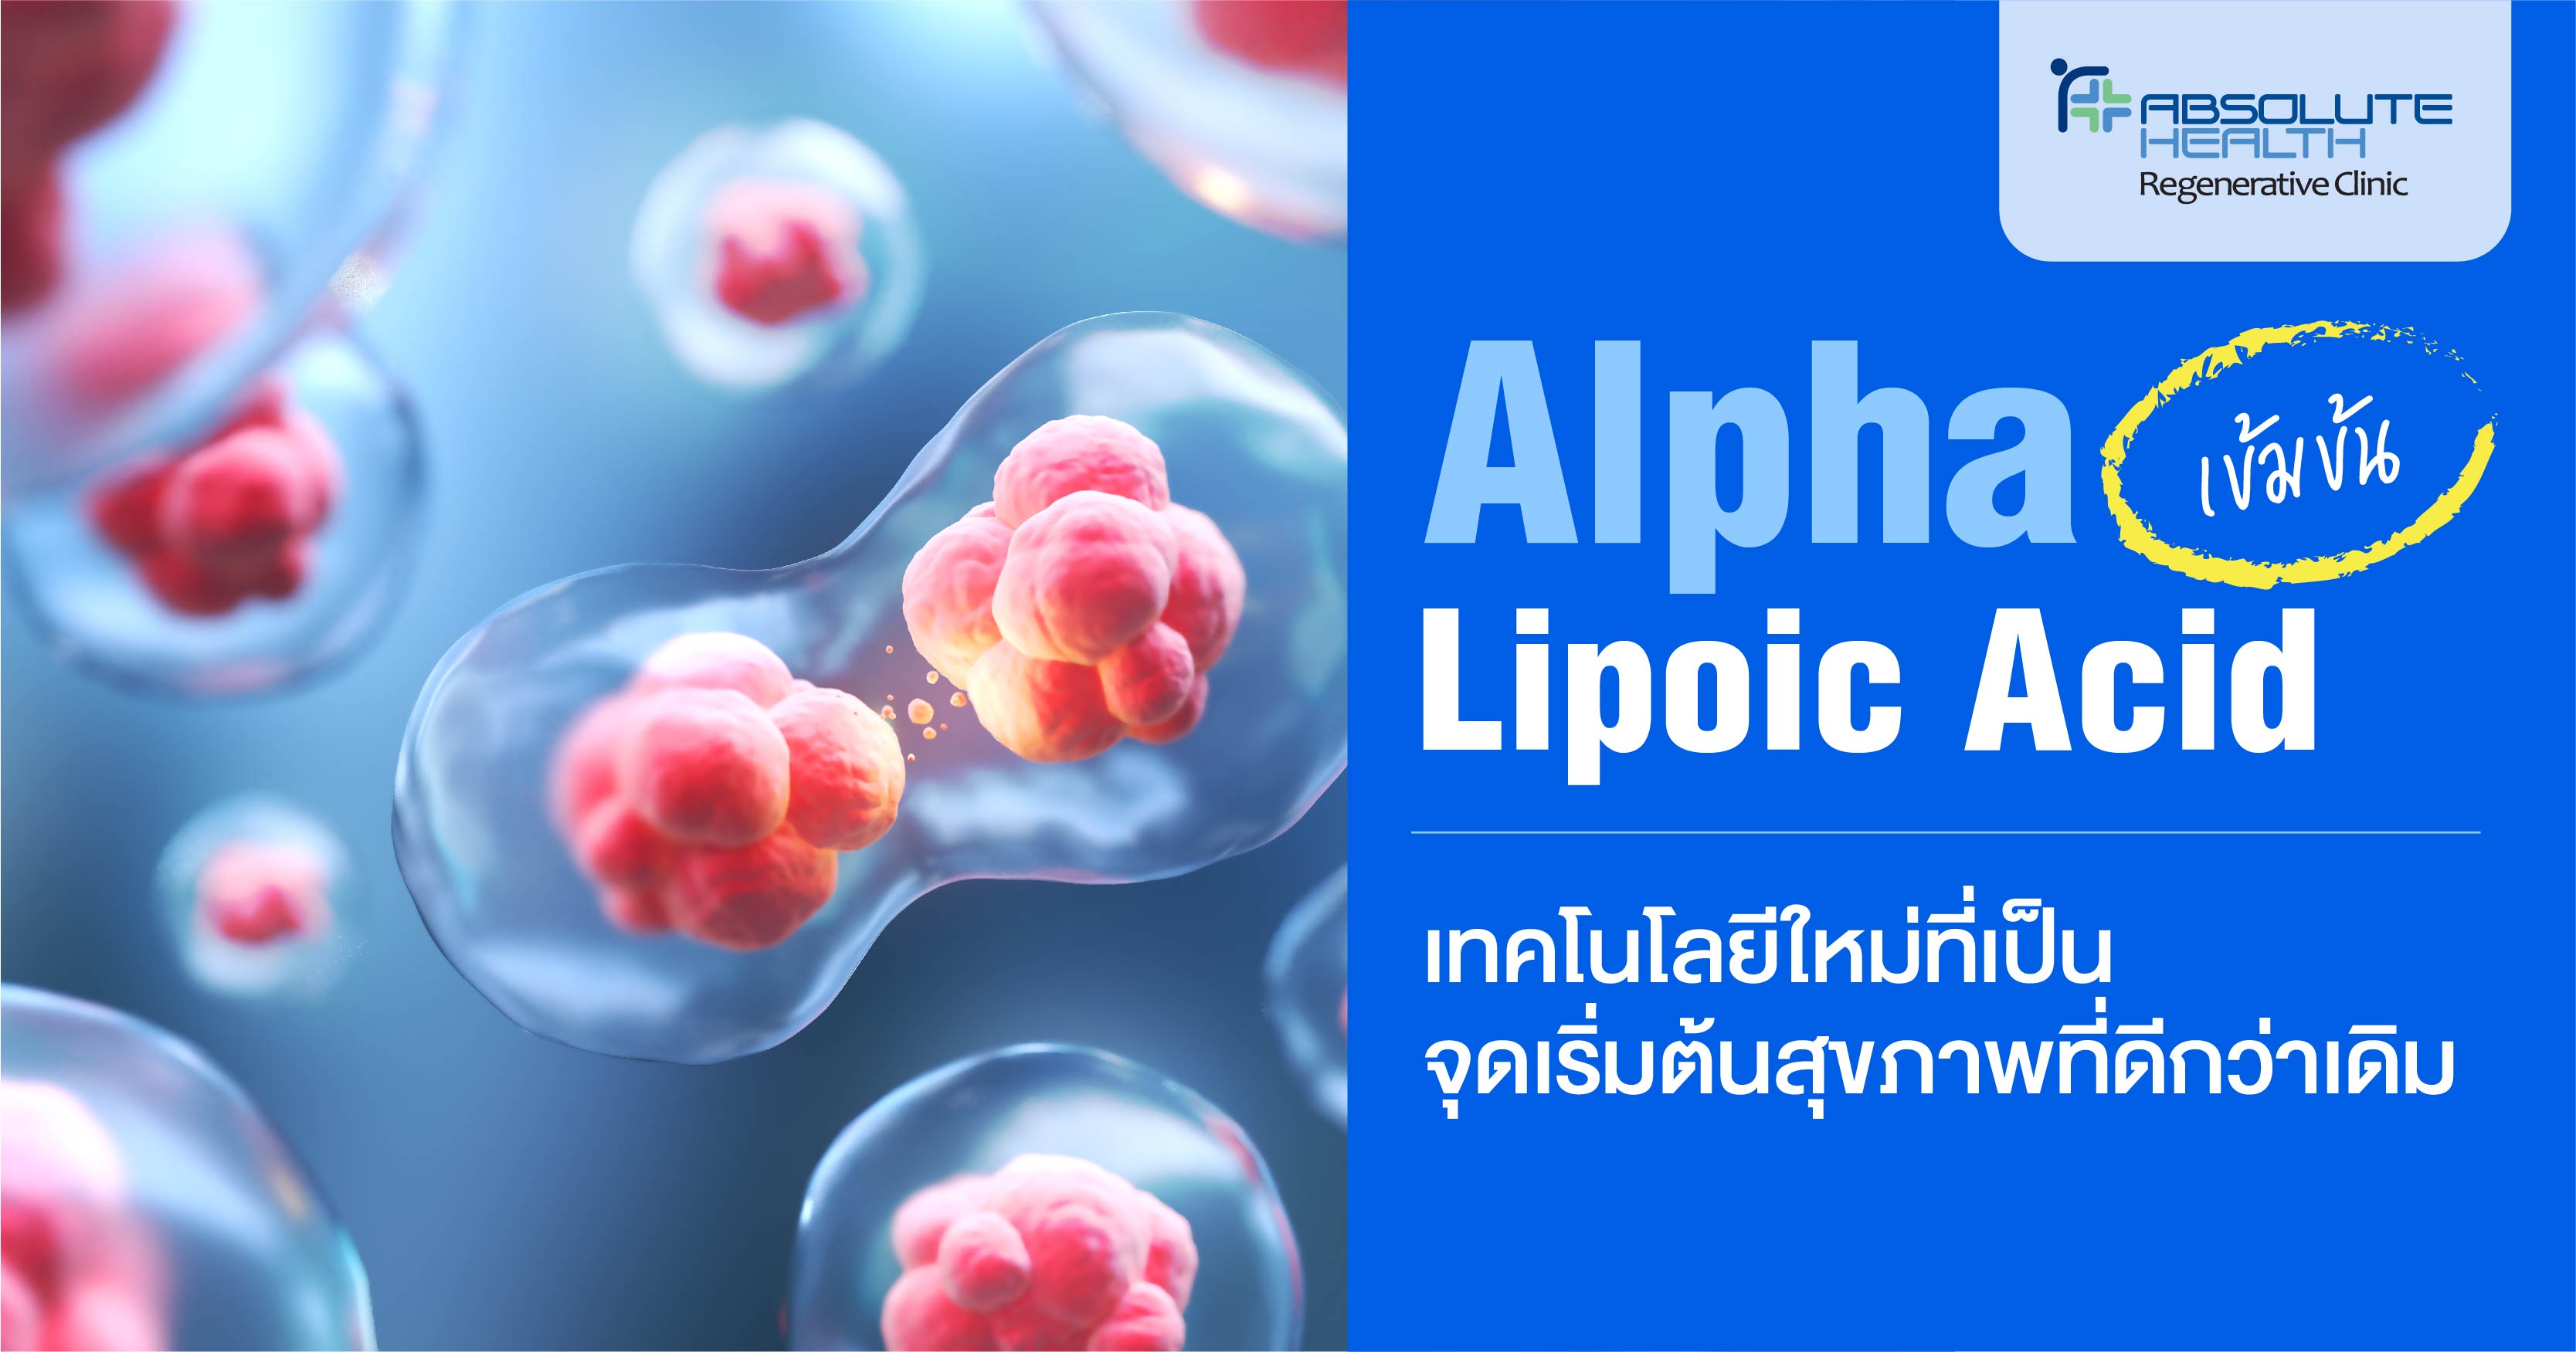 Alpha-Lipoic Acid เข้มข้น เทคโนโลยีใหม่ที่เป็นจุดเริ่มต้นสุขภาพที่ดีกว่าเดิม